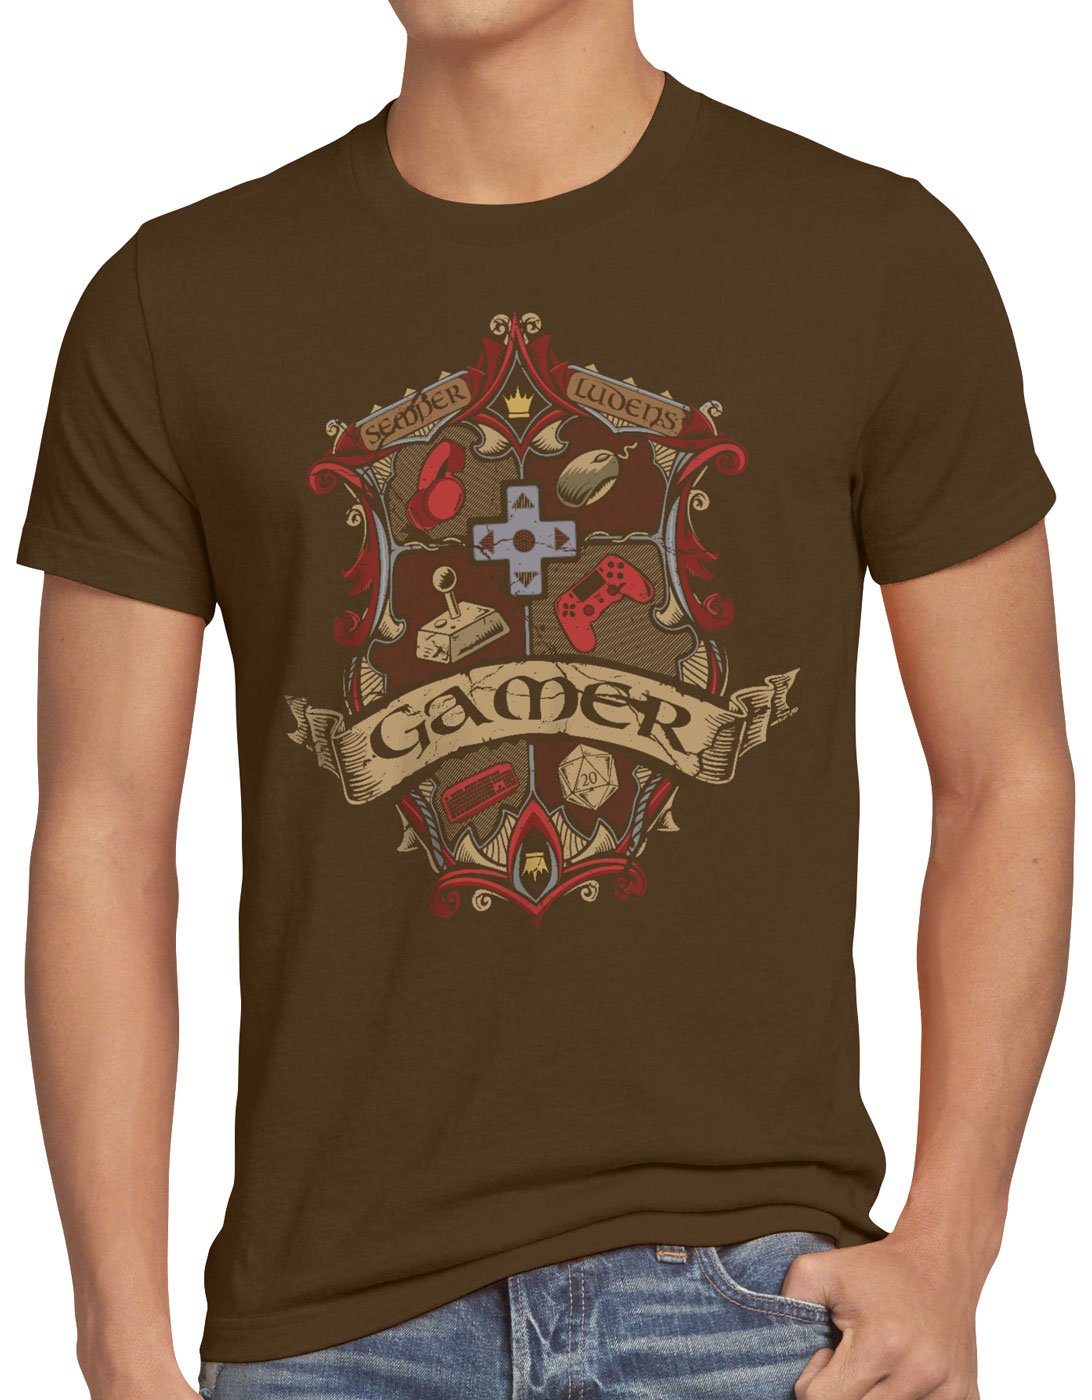 style3 Print-Shirt Herren T-Shirt Gamer Wappen spieleabend gesellschaftsspiel braun